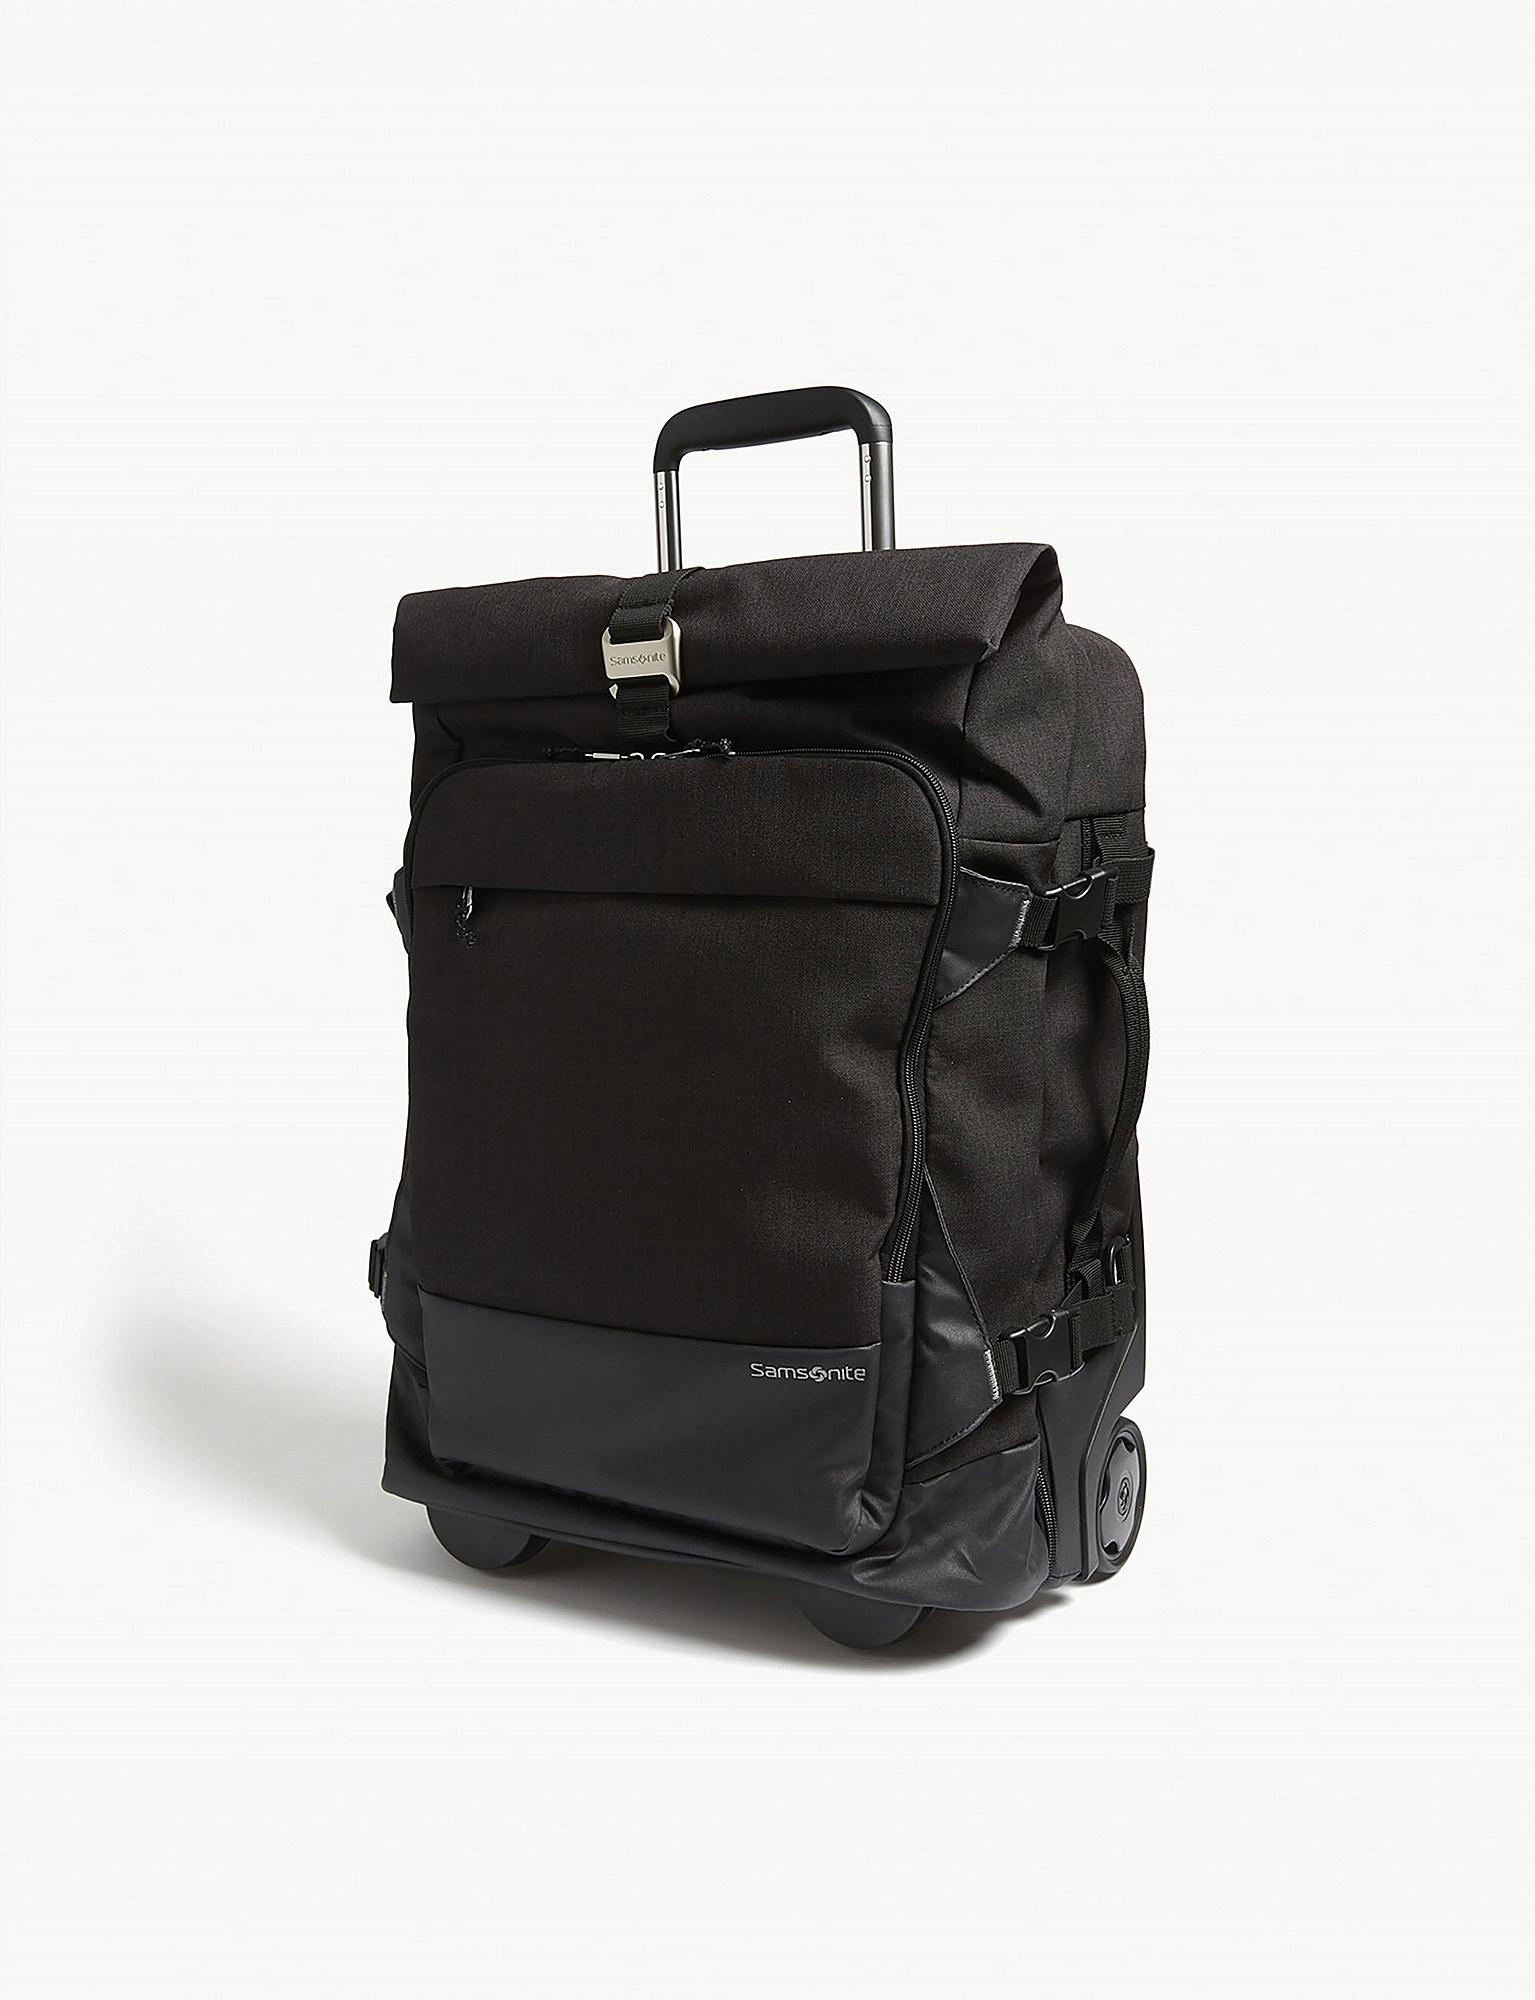 Samsonite Ziproll Four-wheel Duffle Bag Suitcase 55cm in Black for Men - Lyst